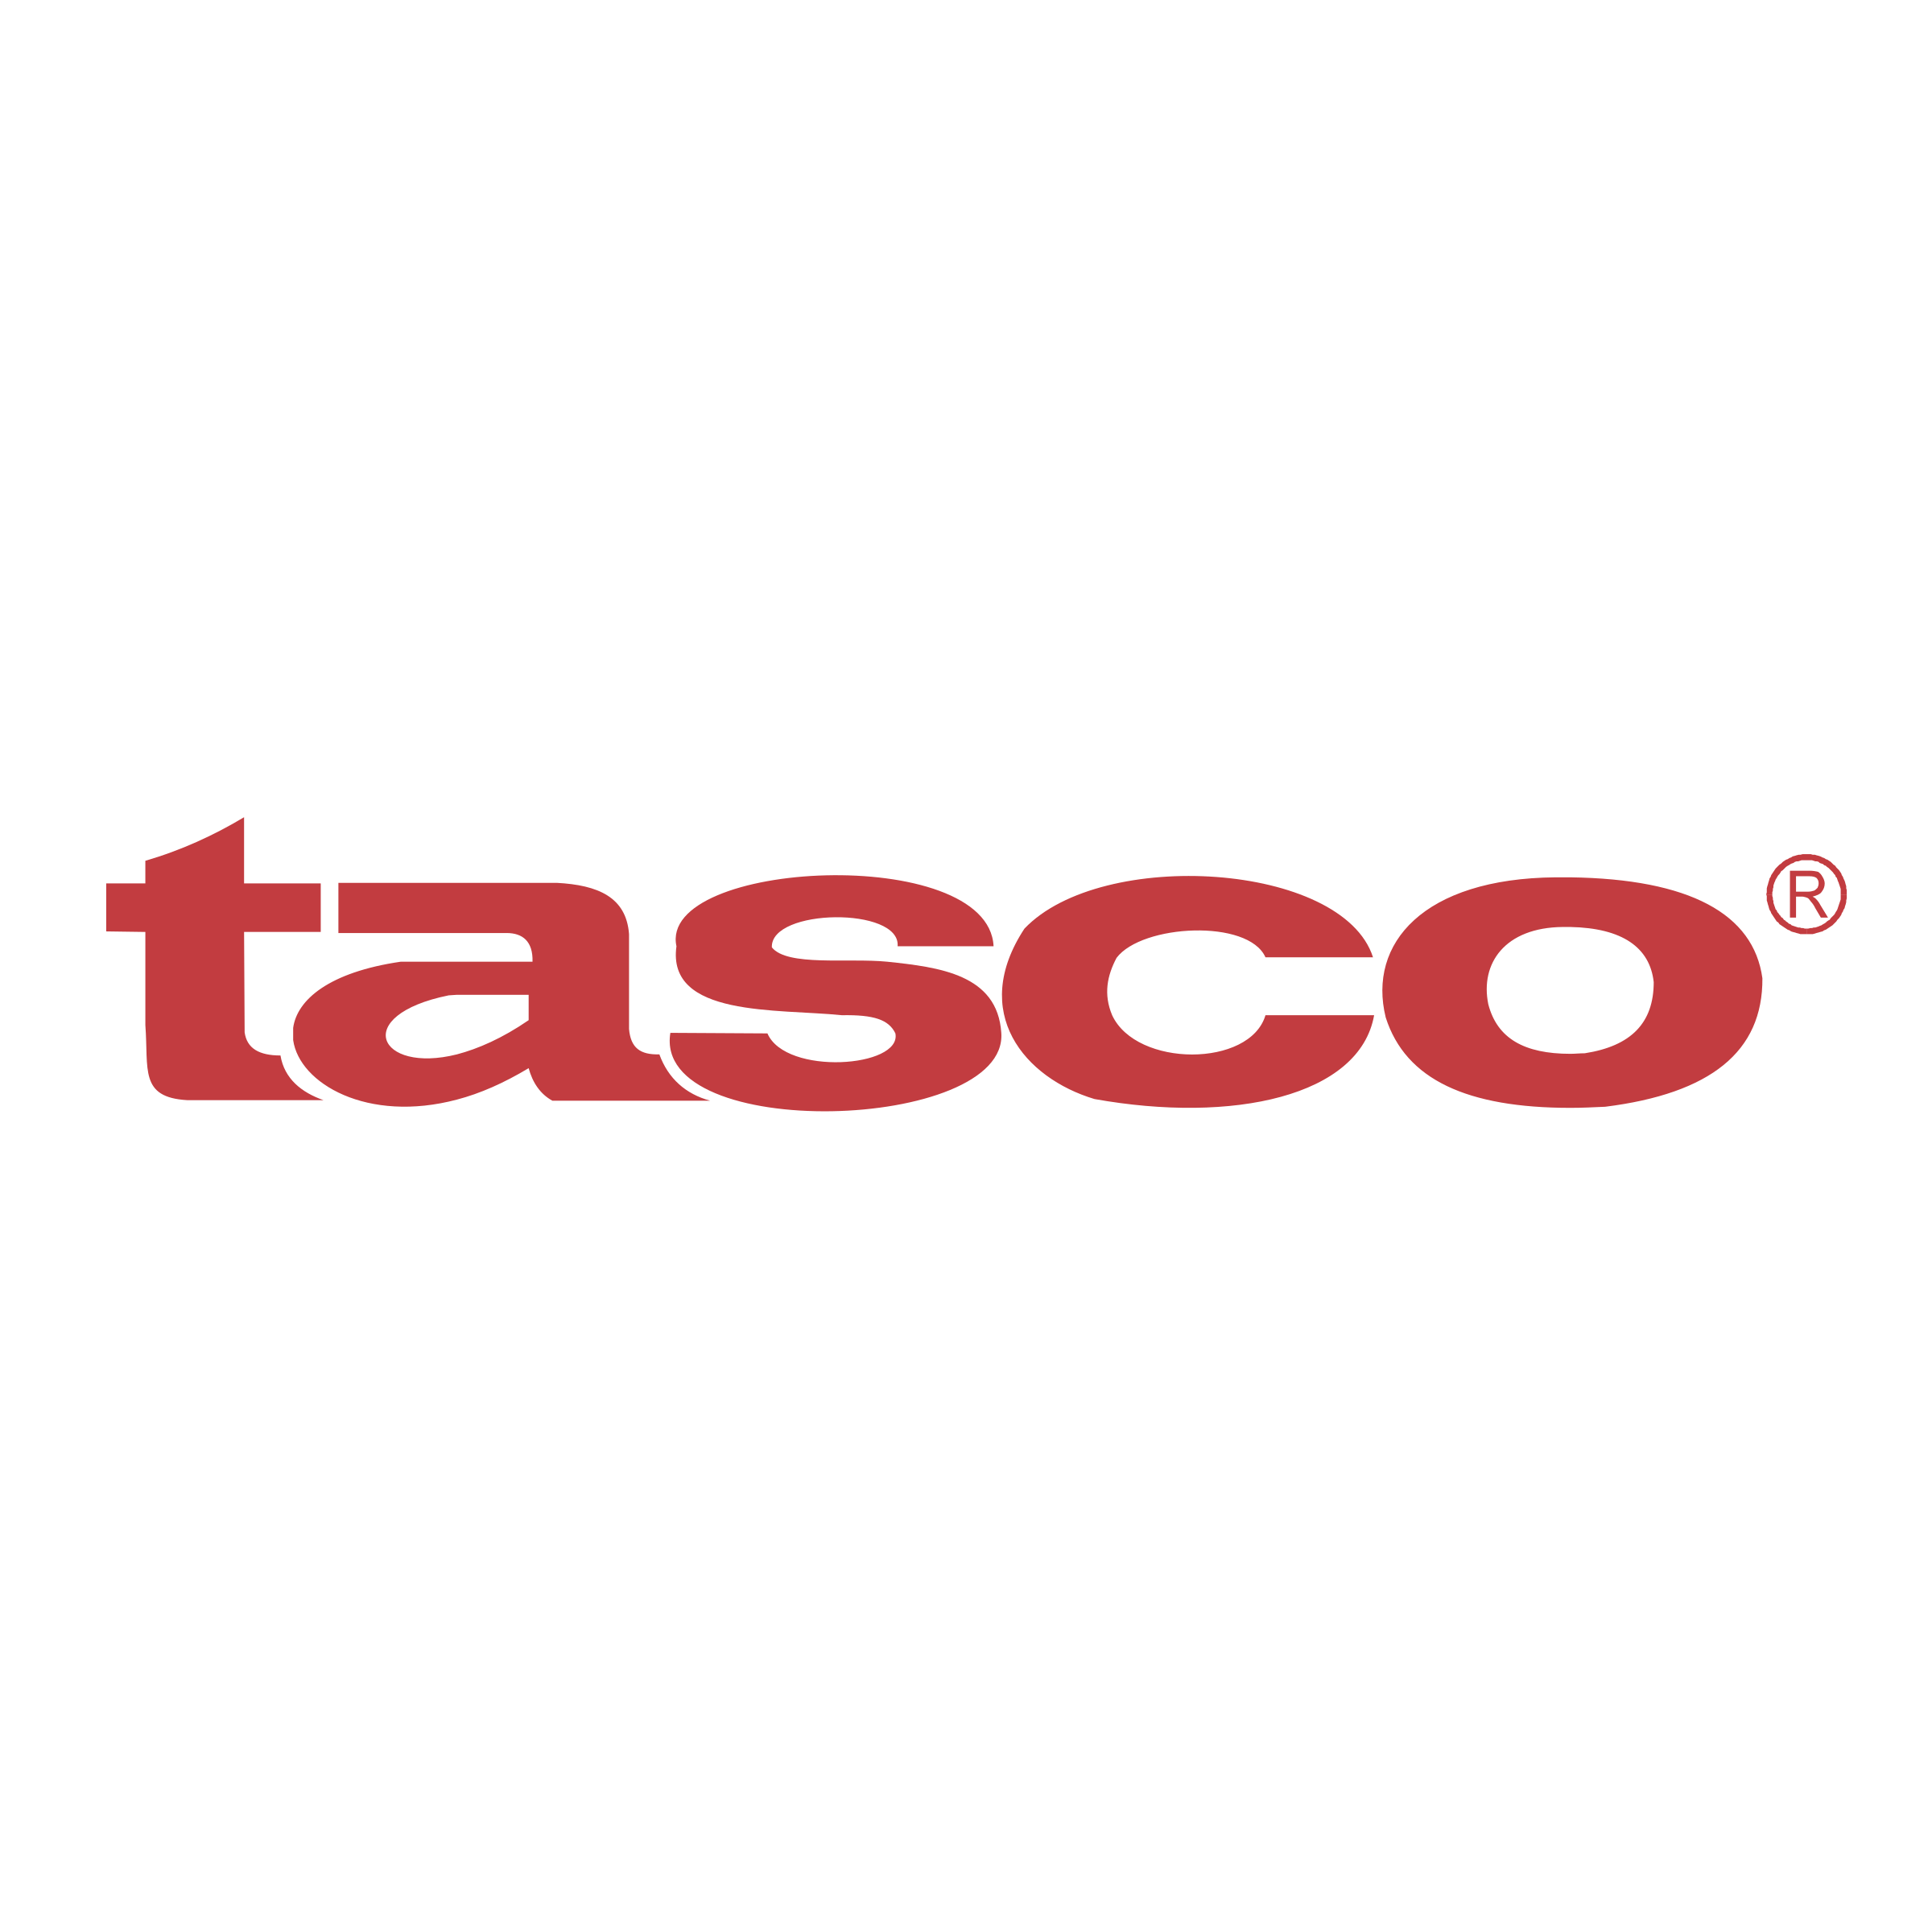 Tasco Spacestation 600 x 50mm Refractor Telescope - image 2 of 2